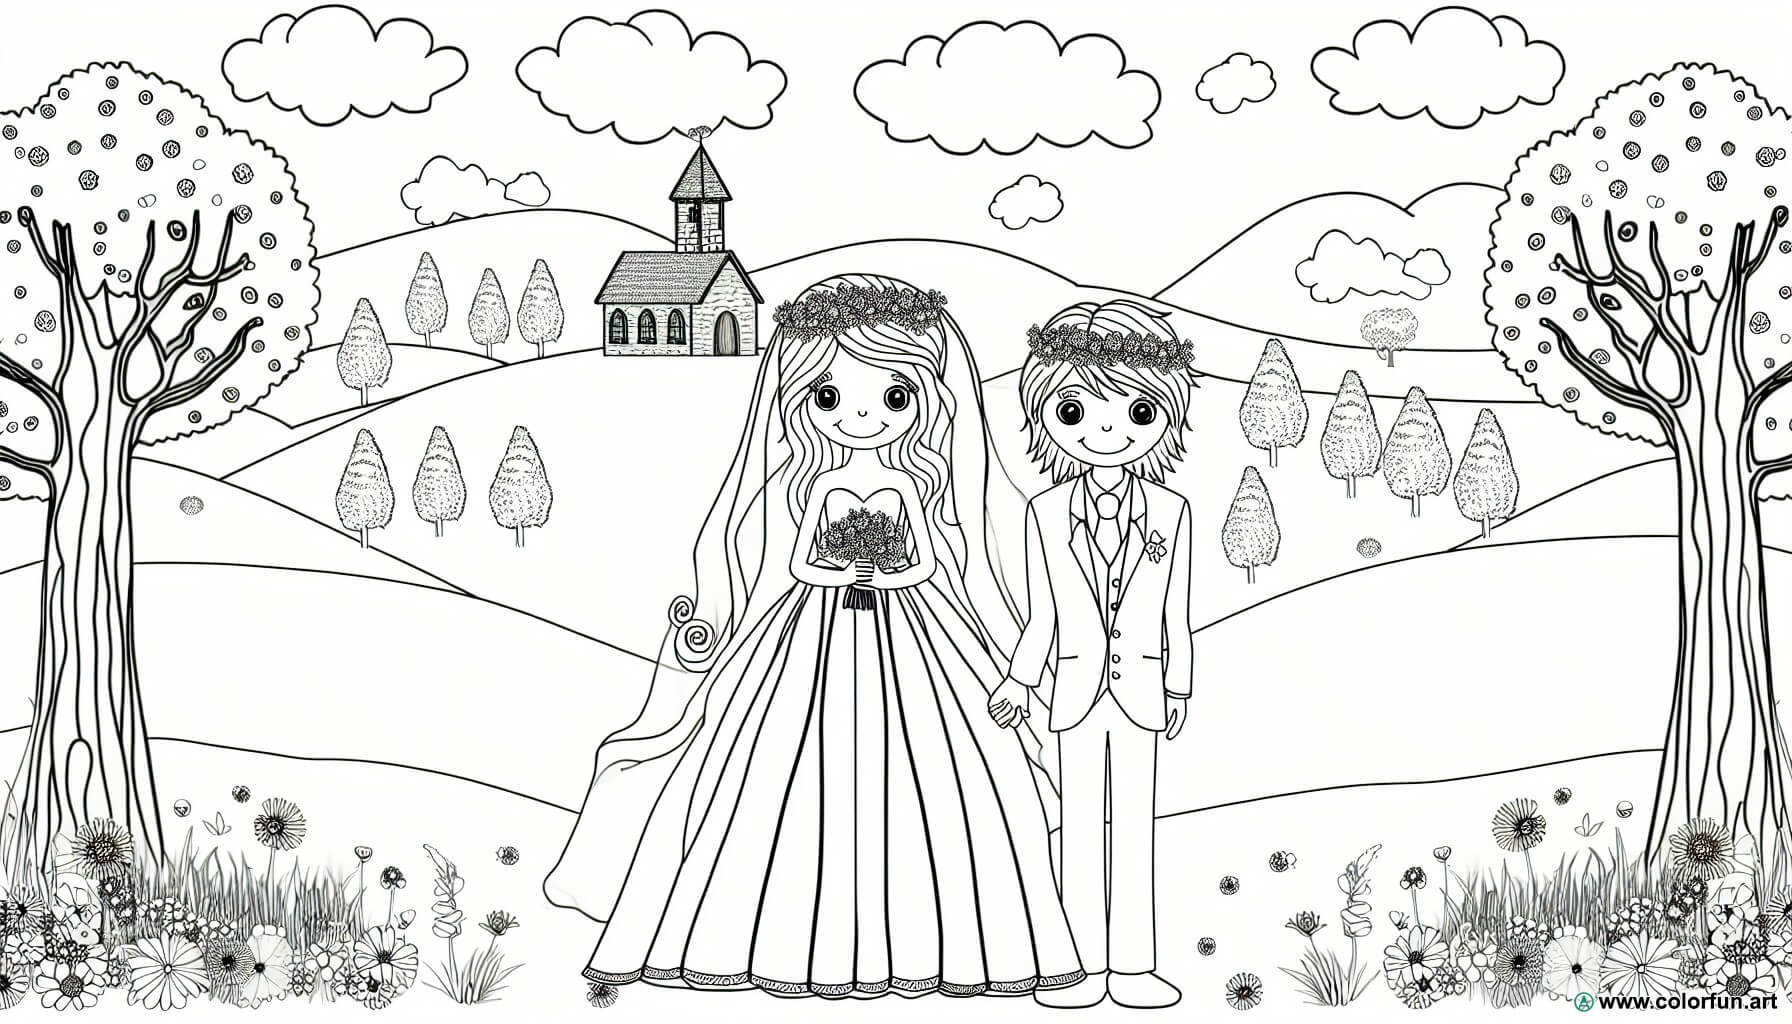 coloring page rustic wedding